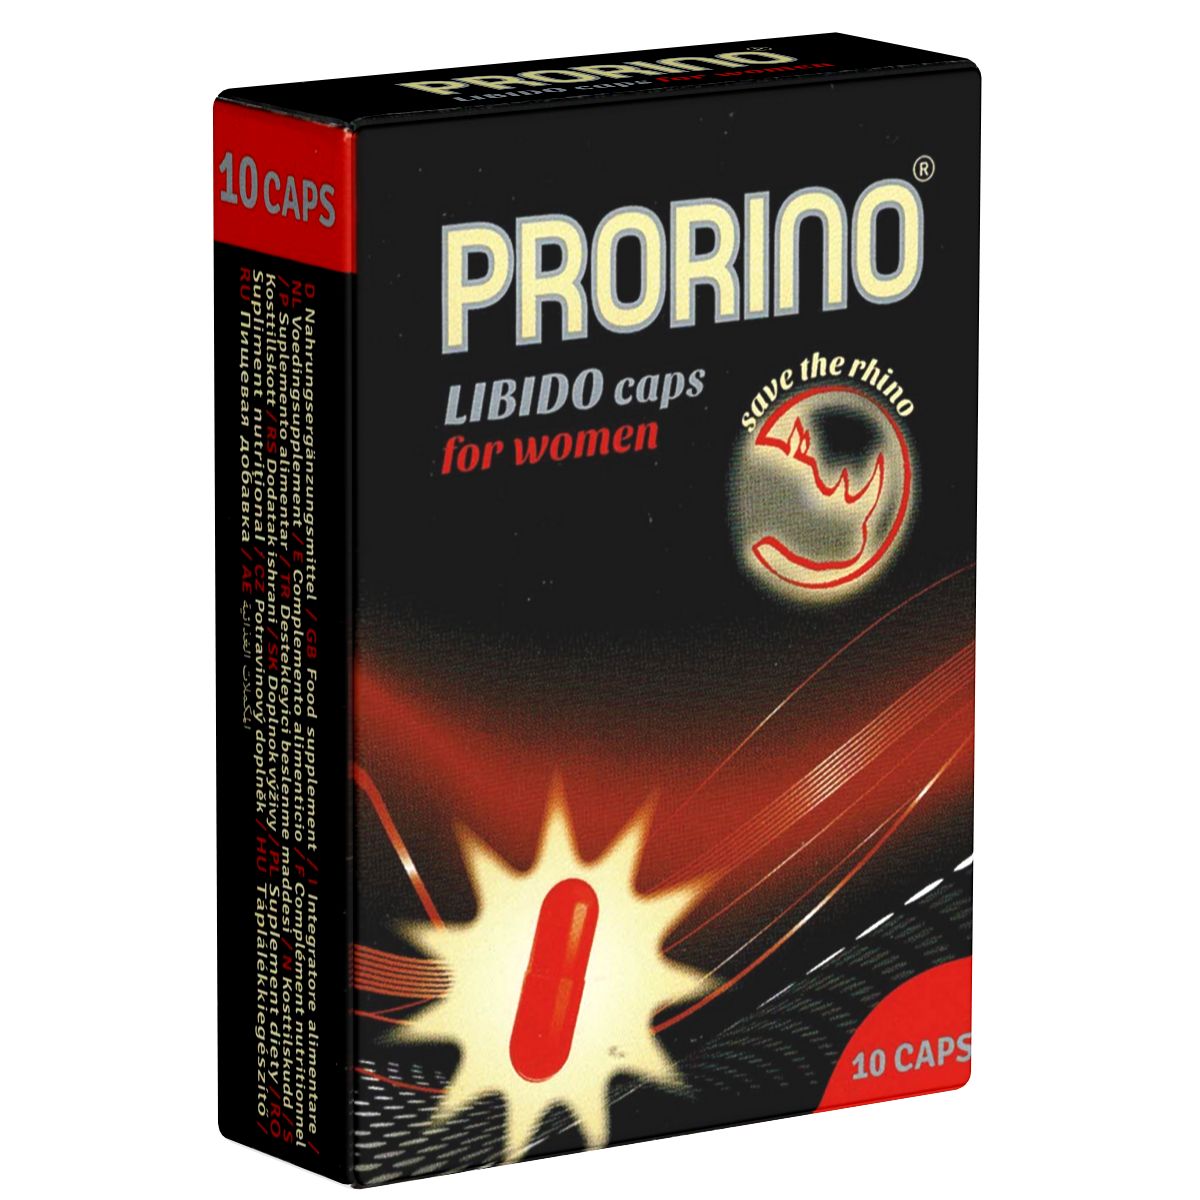 Prorino *Libido Caps* for women